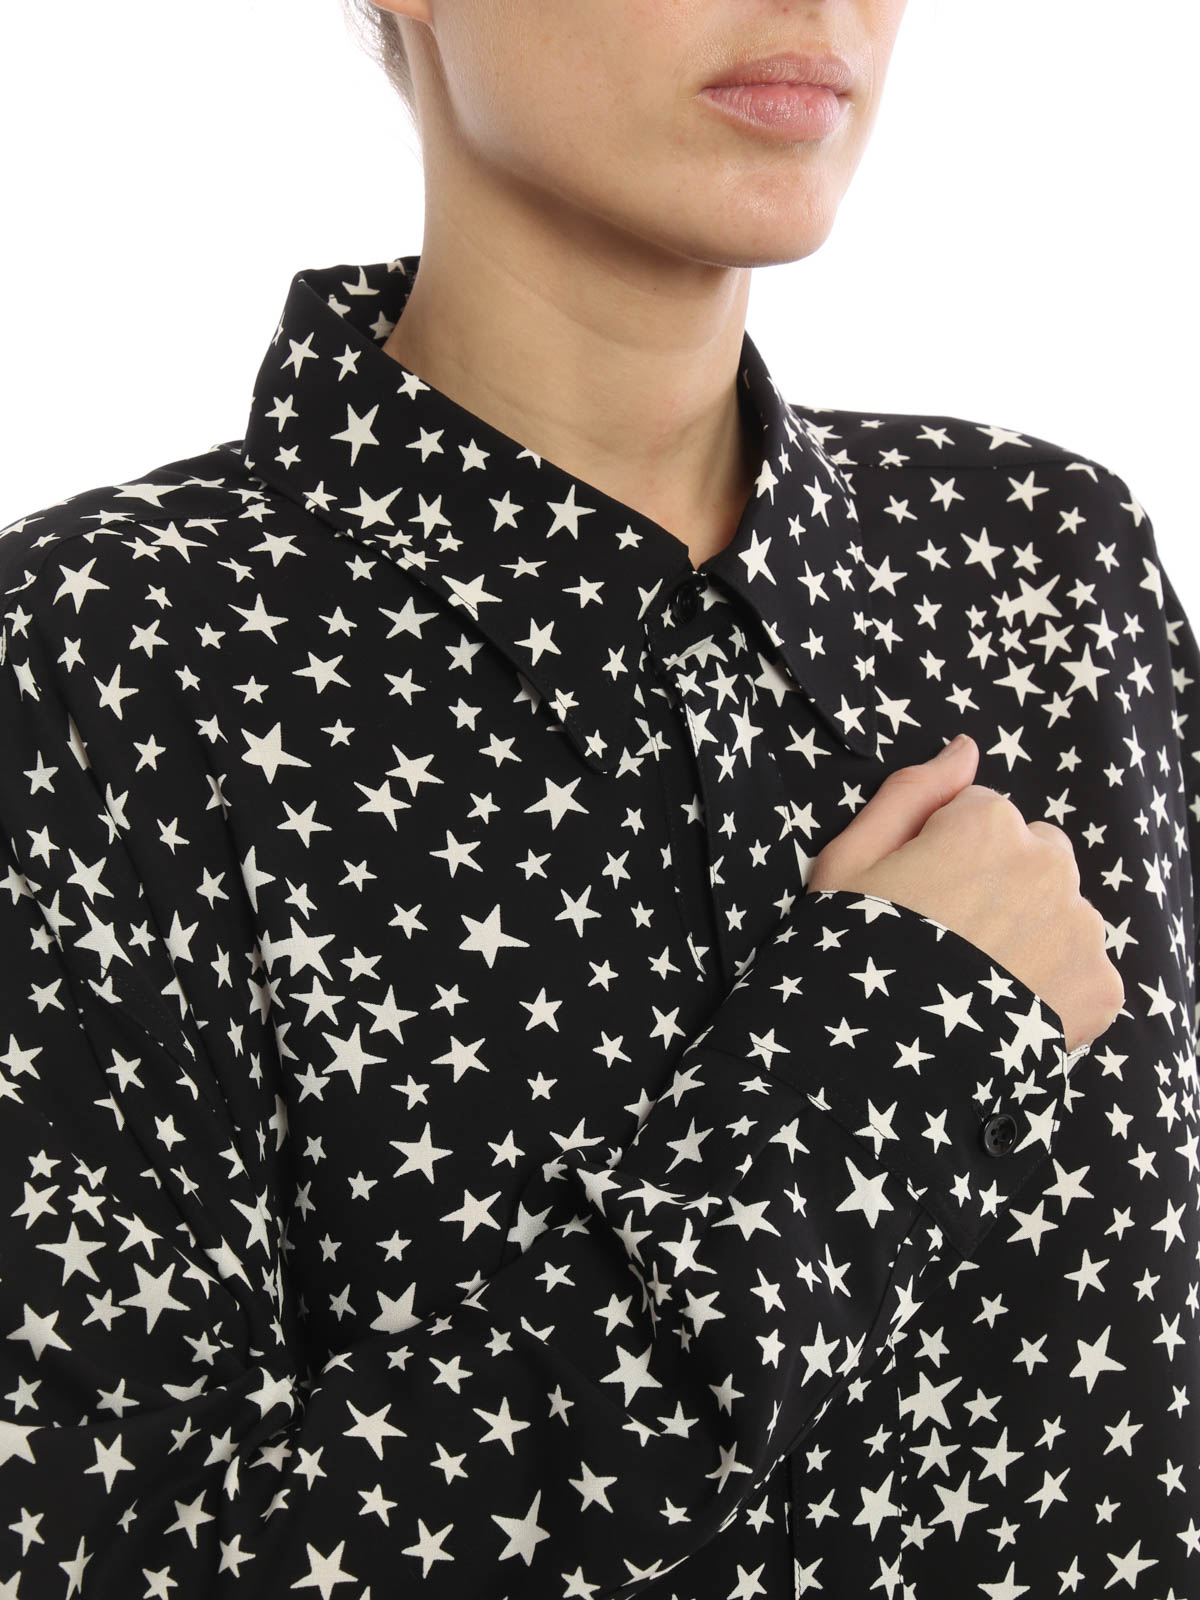 star print shirt dress